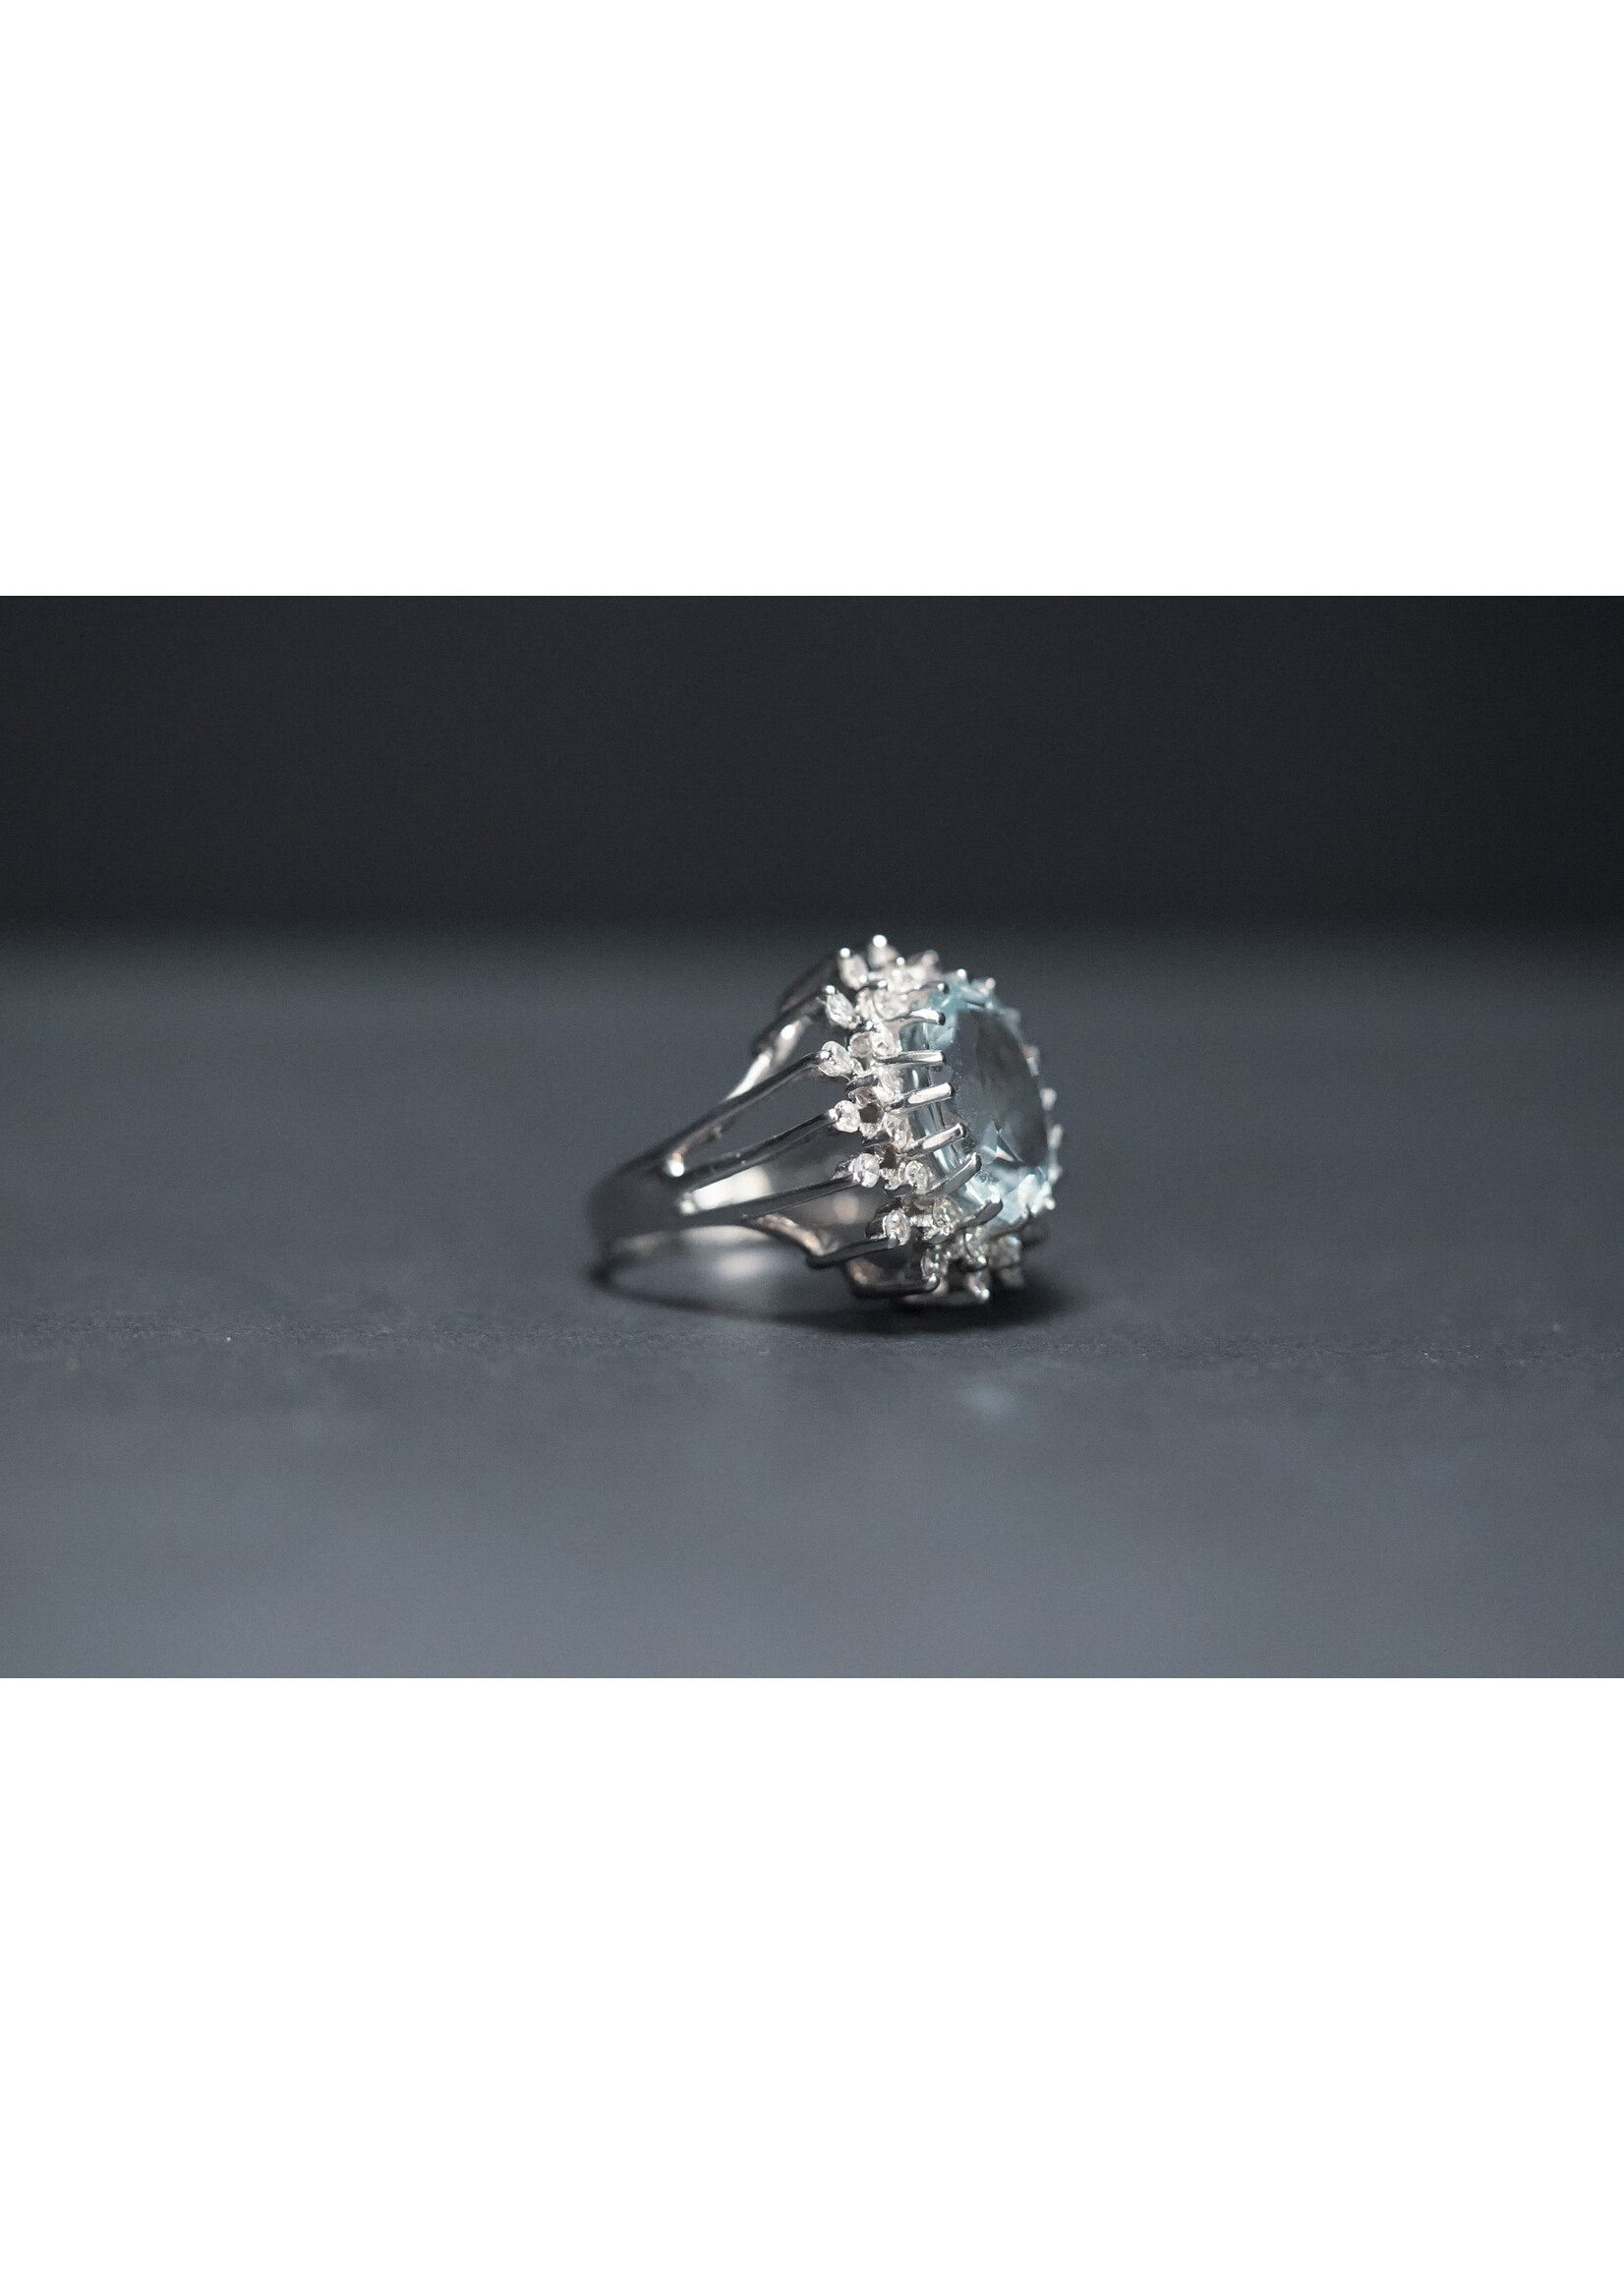 14KW 8.4g 6.00ctw (5.50ctr) Aquamarine & Diamond Halo Ring (size 6.5)